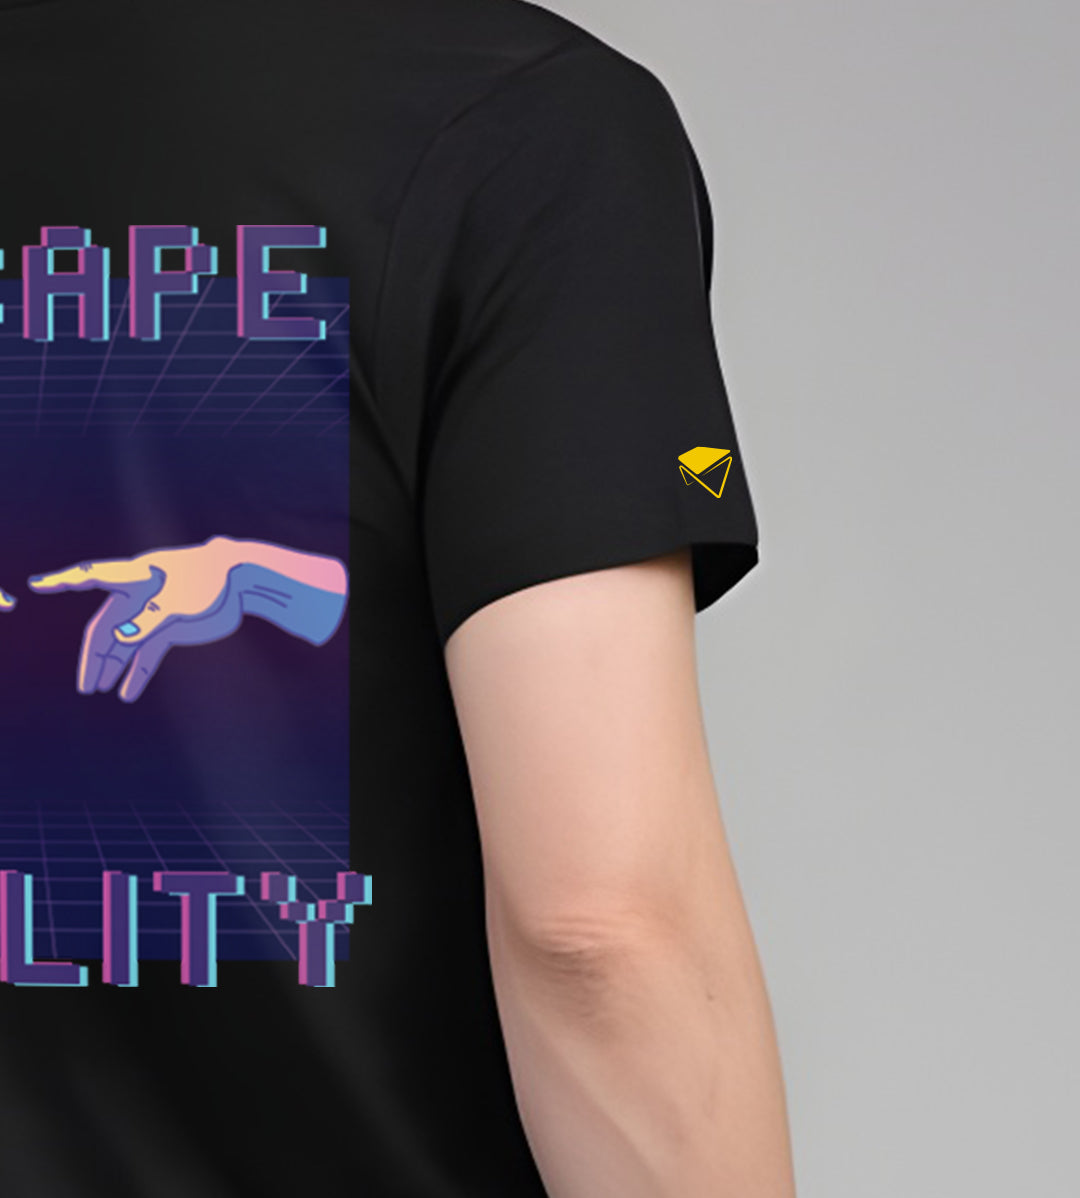 Escape Reality T-Shirt